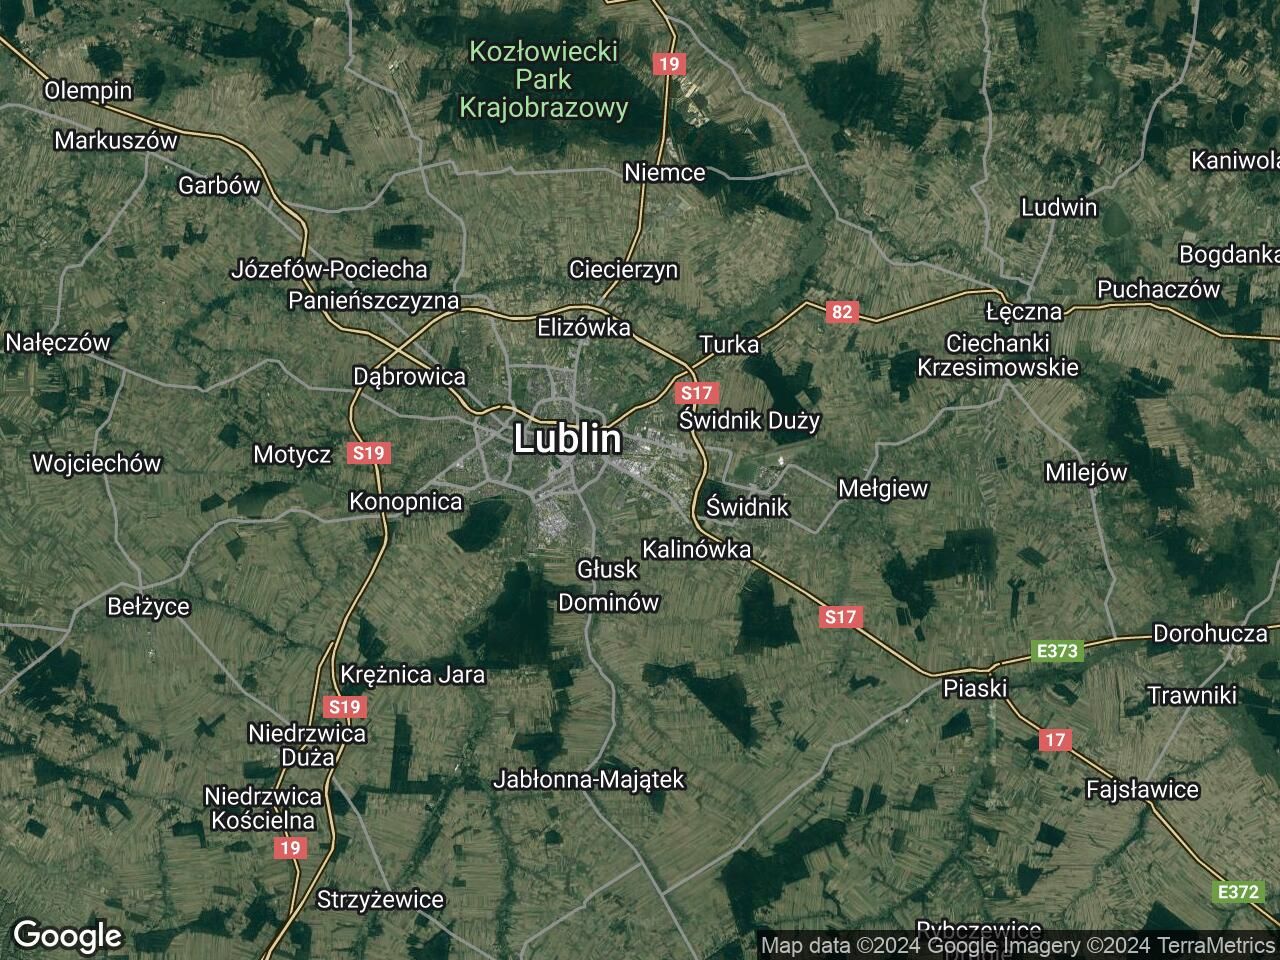 Lokal Lublin, al. Wincentego Witosa